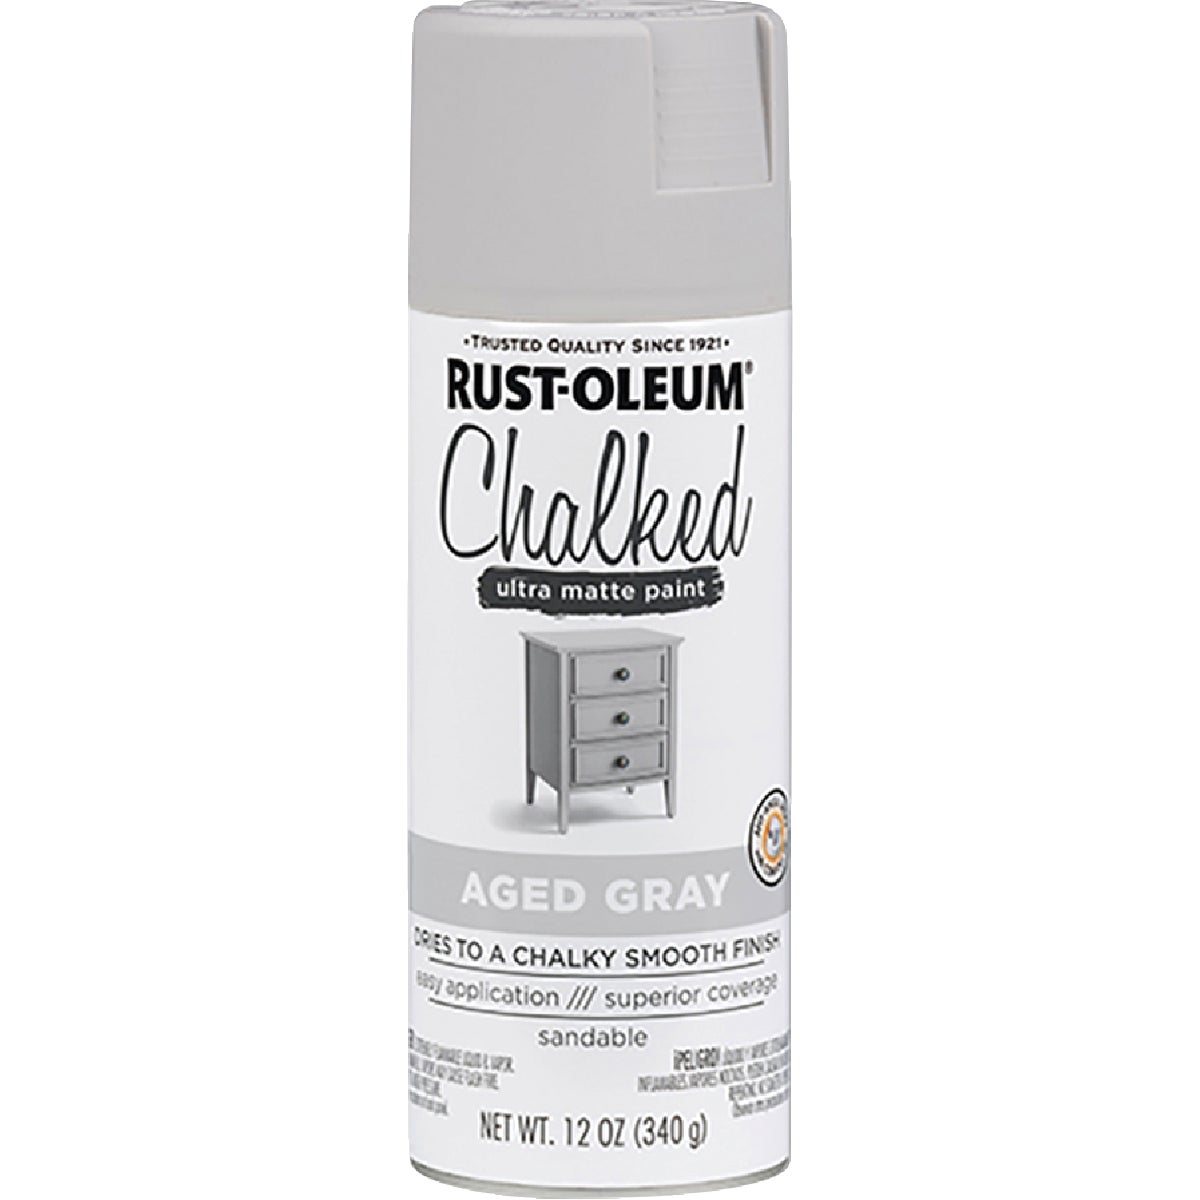 Rust-Oleum Chalked 12 Oz. Ultra Matte Spray Paint, Aged Gray